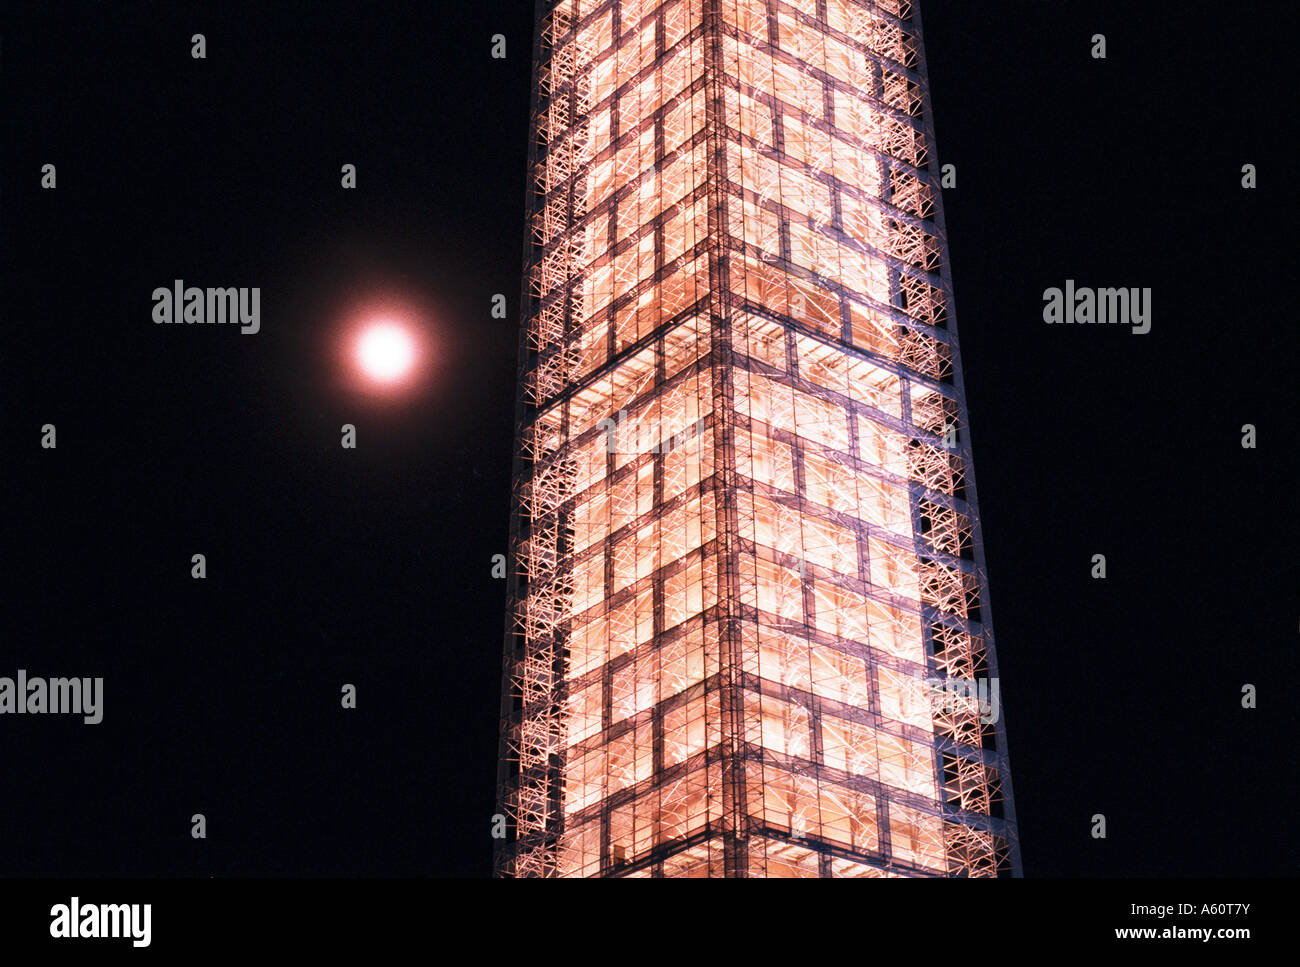 Washington Monument with scaffolding in Washington D.C. Stock Photo